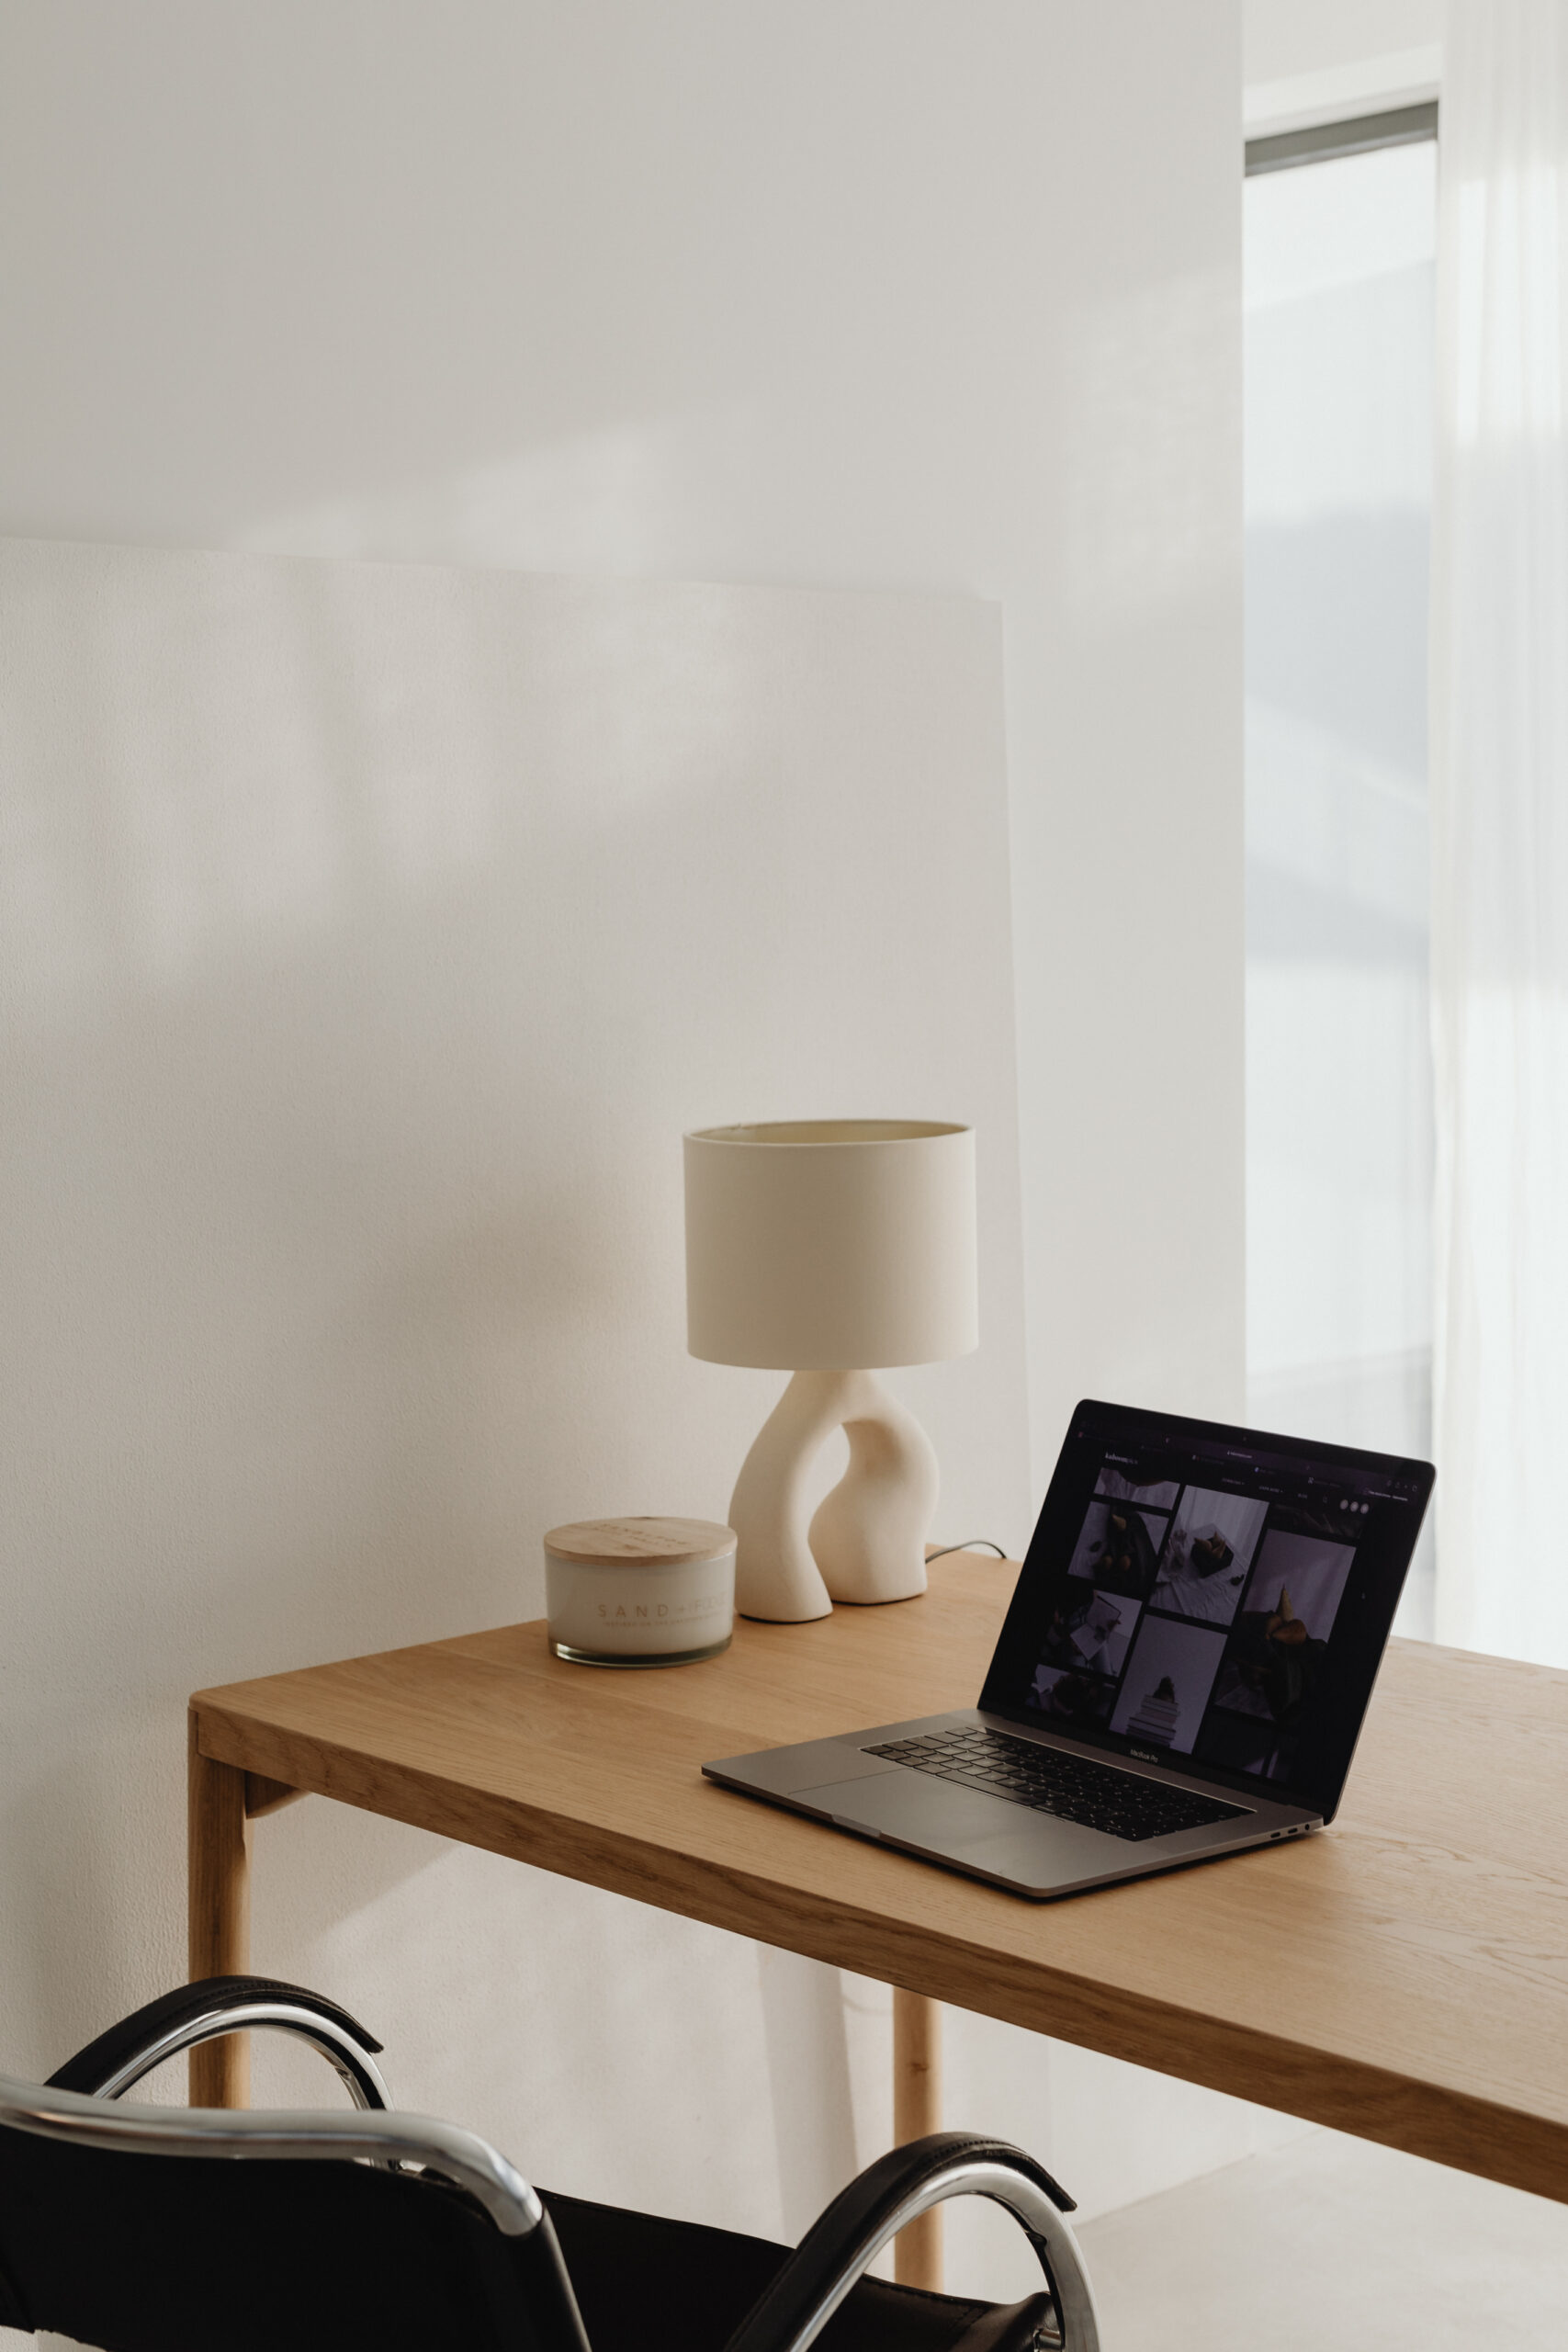 studio pure wooden desk laptop home office minimalist warm minimal